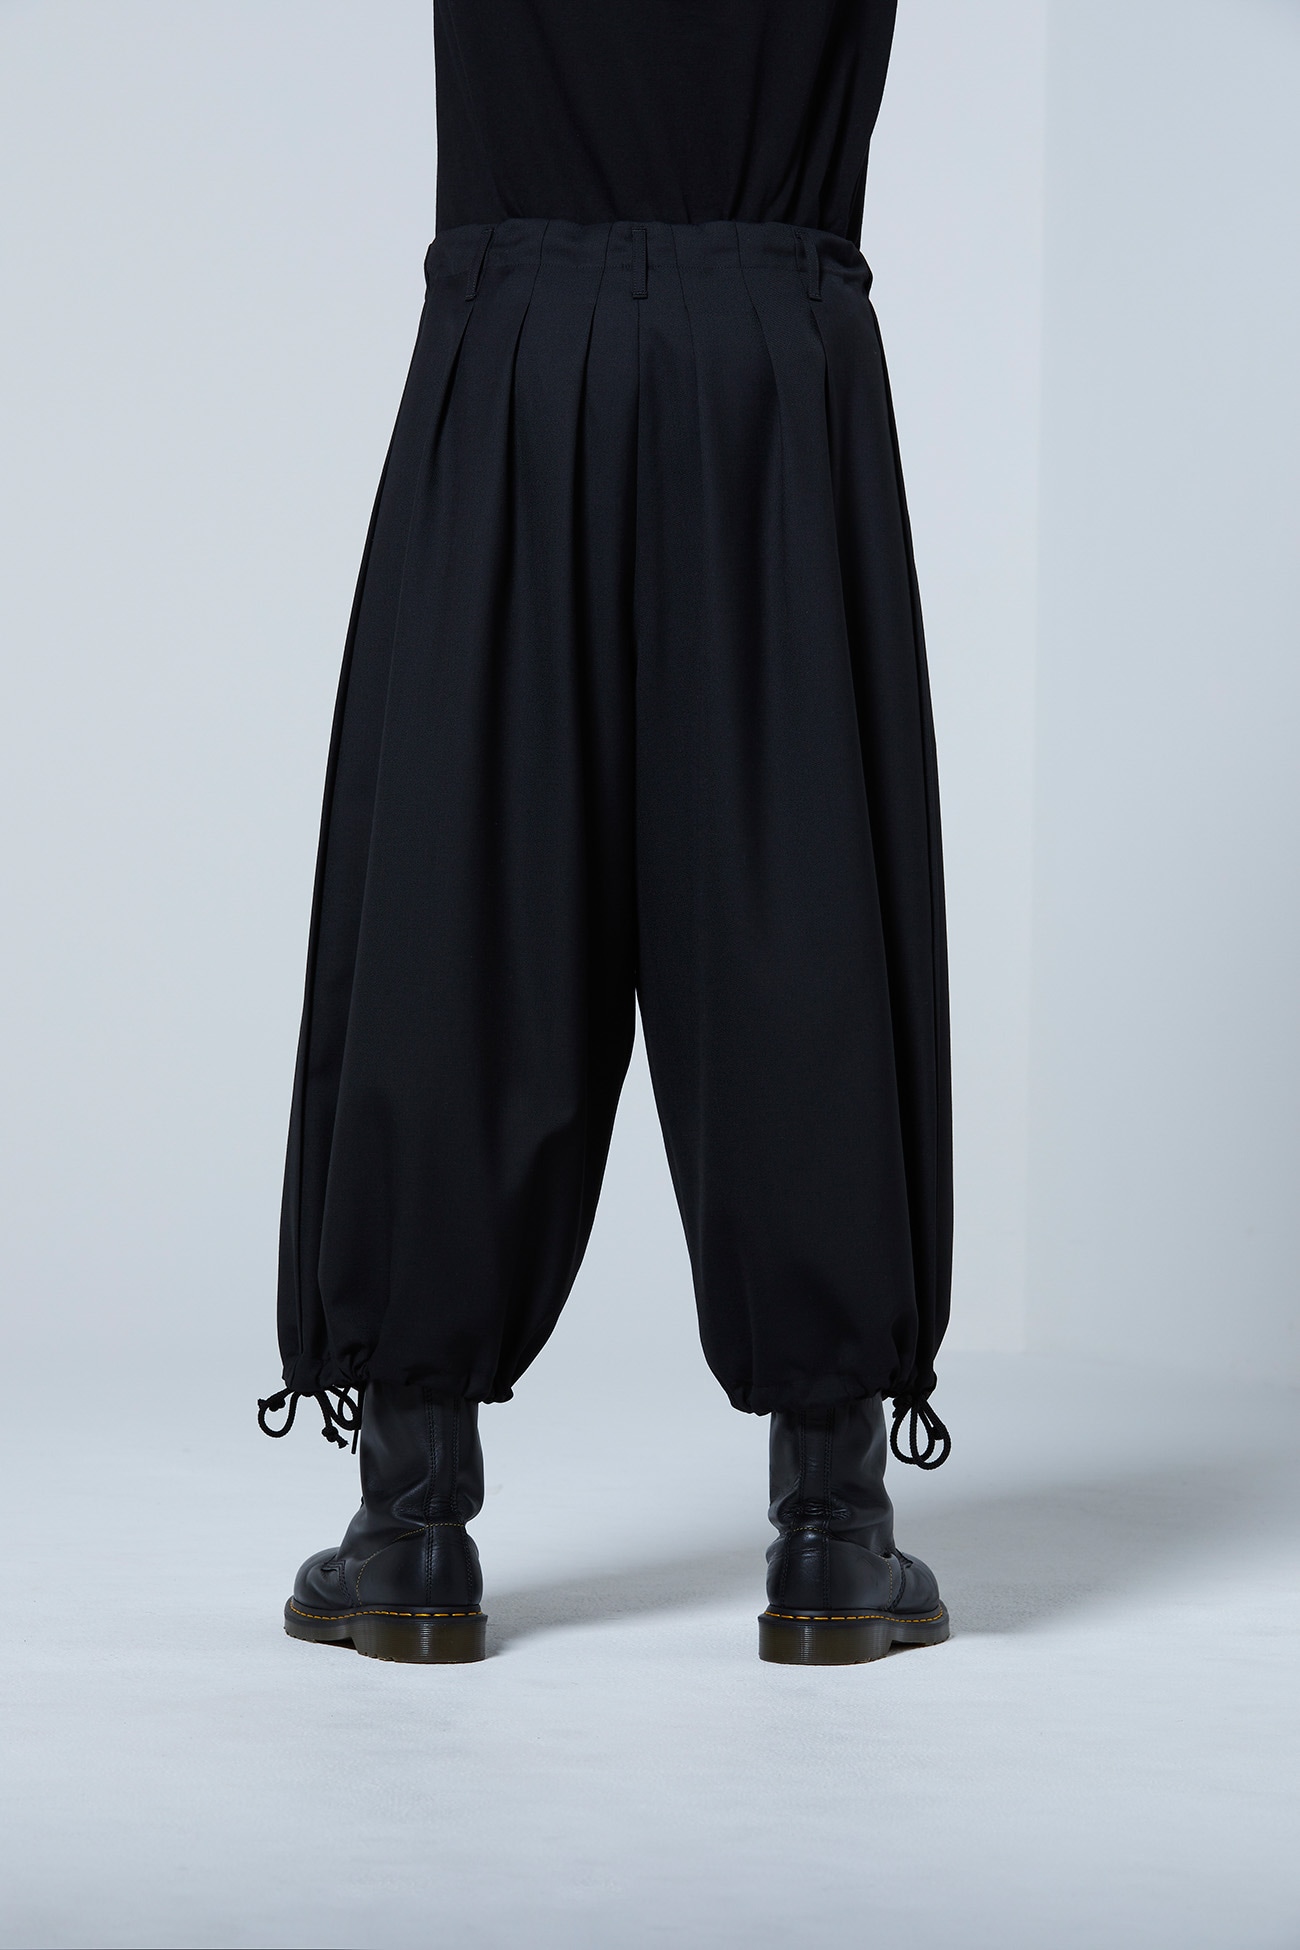 adidas Originals trousers Balloon Pant women's black color | buy on PRM